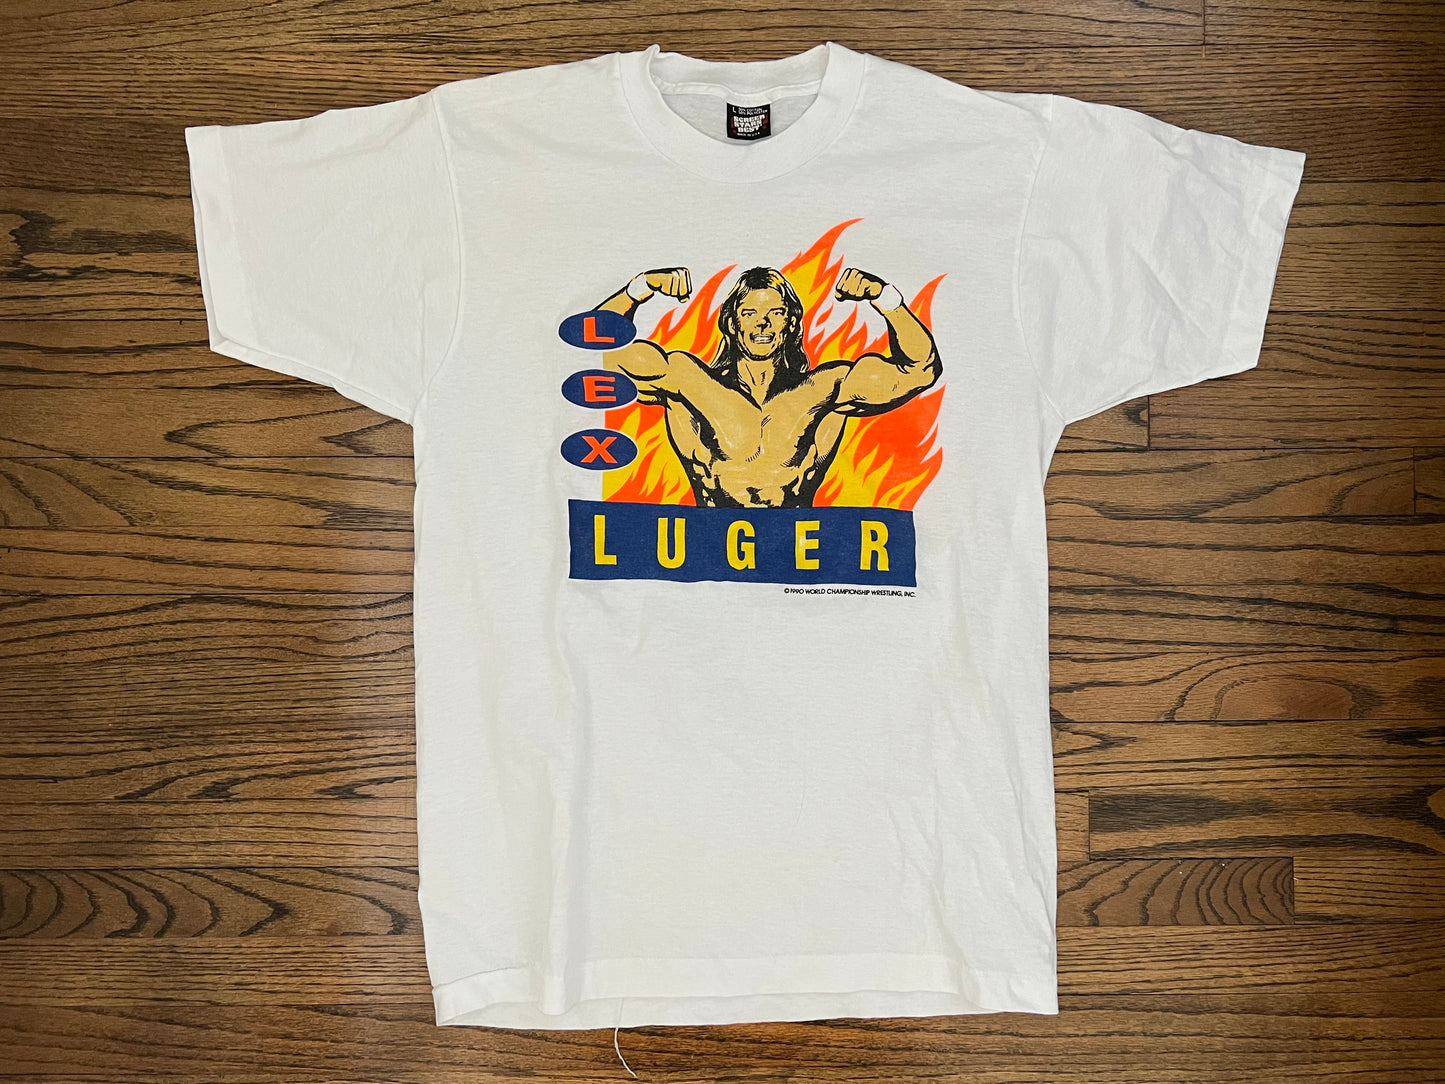 1990 WCW “Total Package” Lex Luger catalog shirt